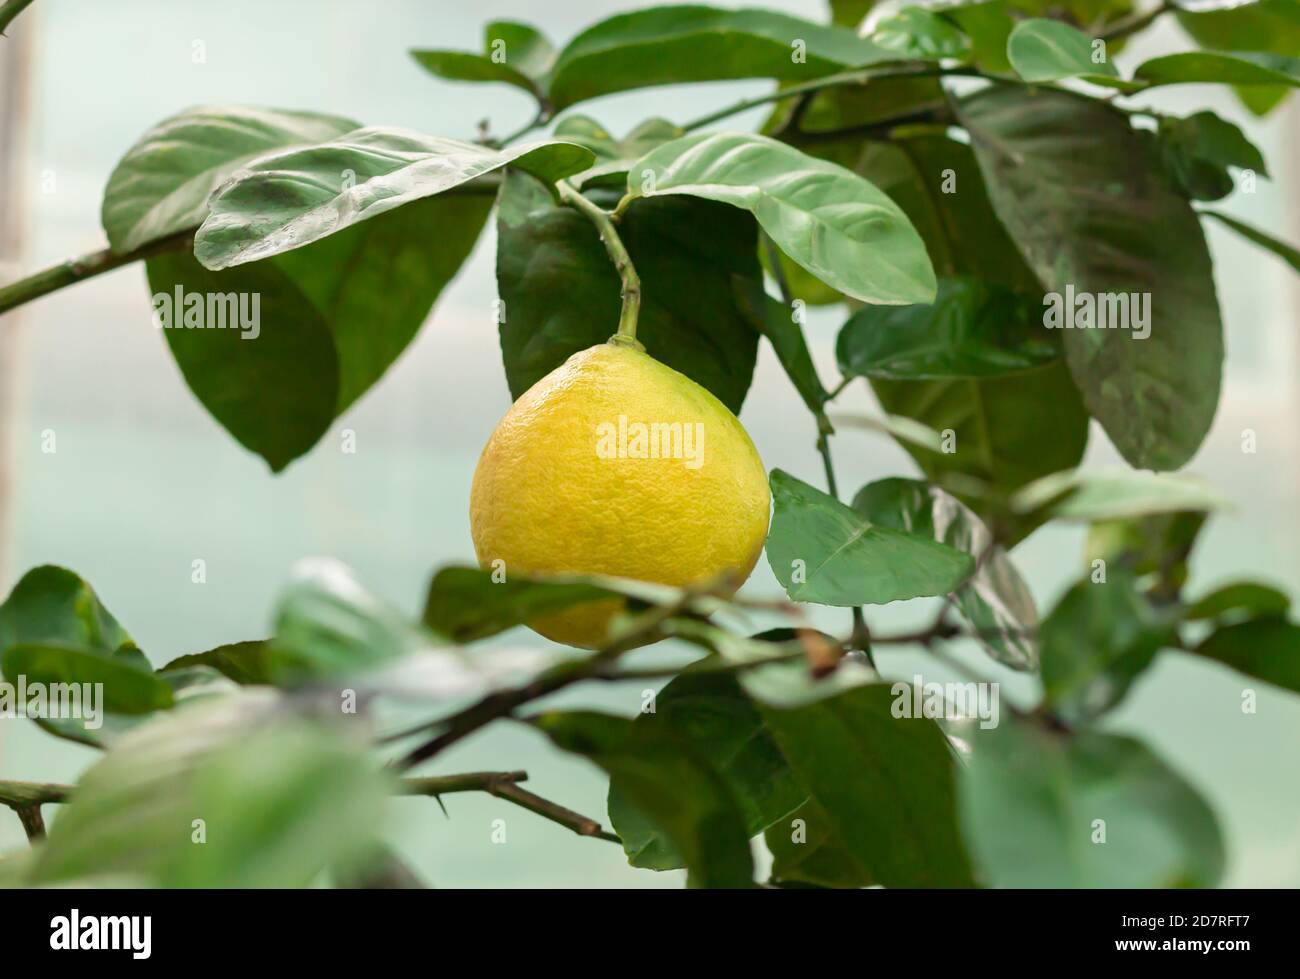 Ripe yellow lemon hanging on tree branch close-up Stock Photo